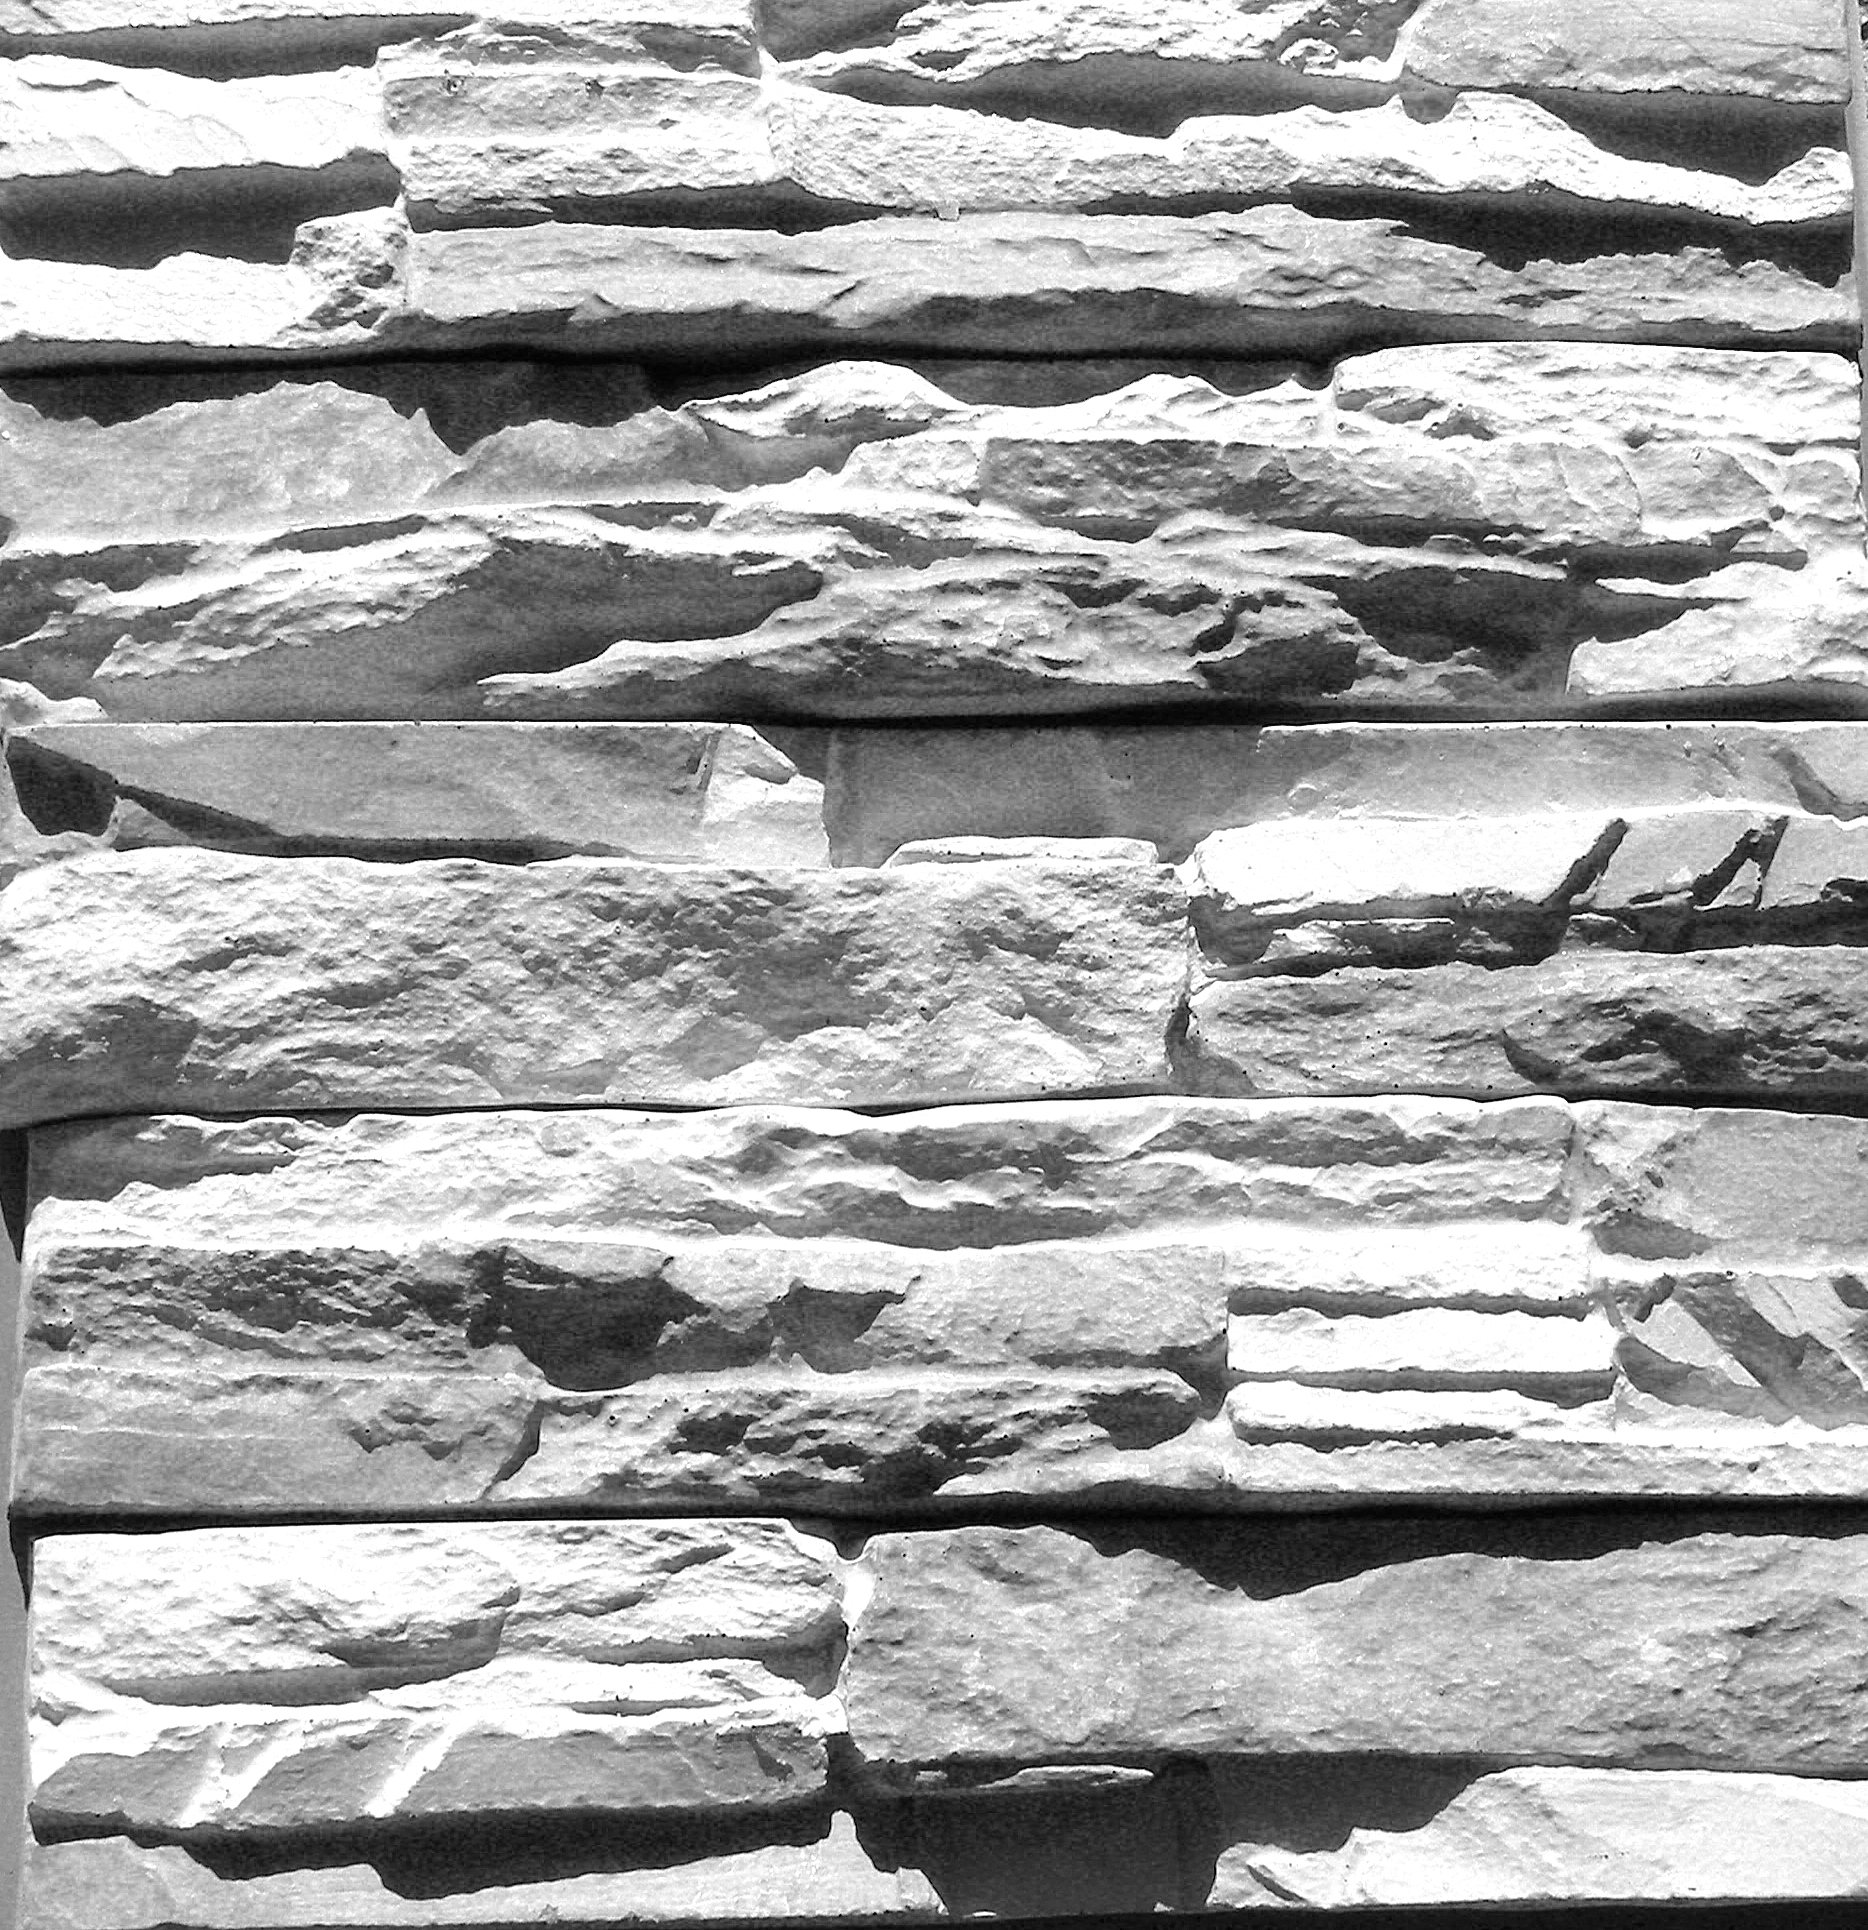 RAMO искусственный камень РОКИ РОК без окраски скала (бетон) 0,5м2/уп, RAMO искусственный камень РОКИ РОК без окраски скала (бетон) 0,5м2/уп